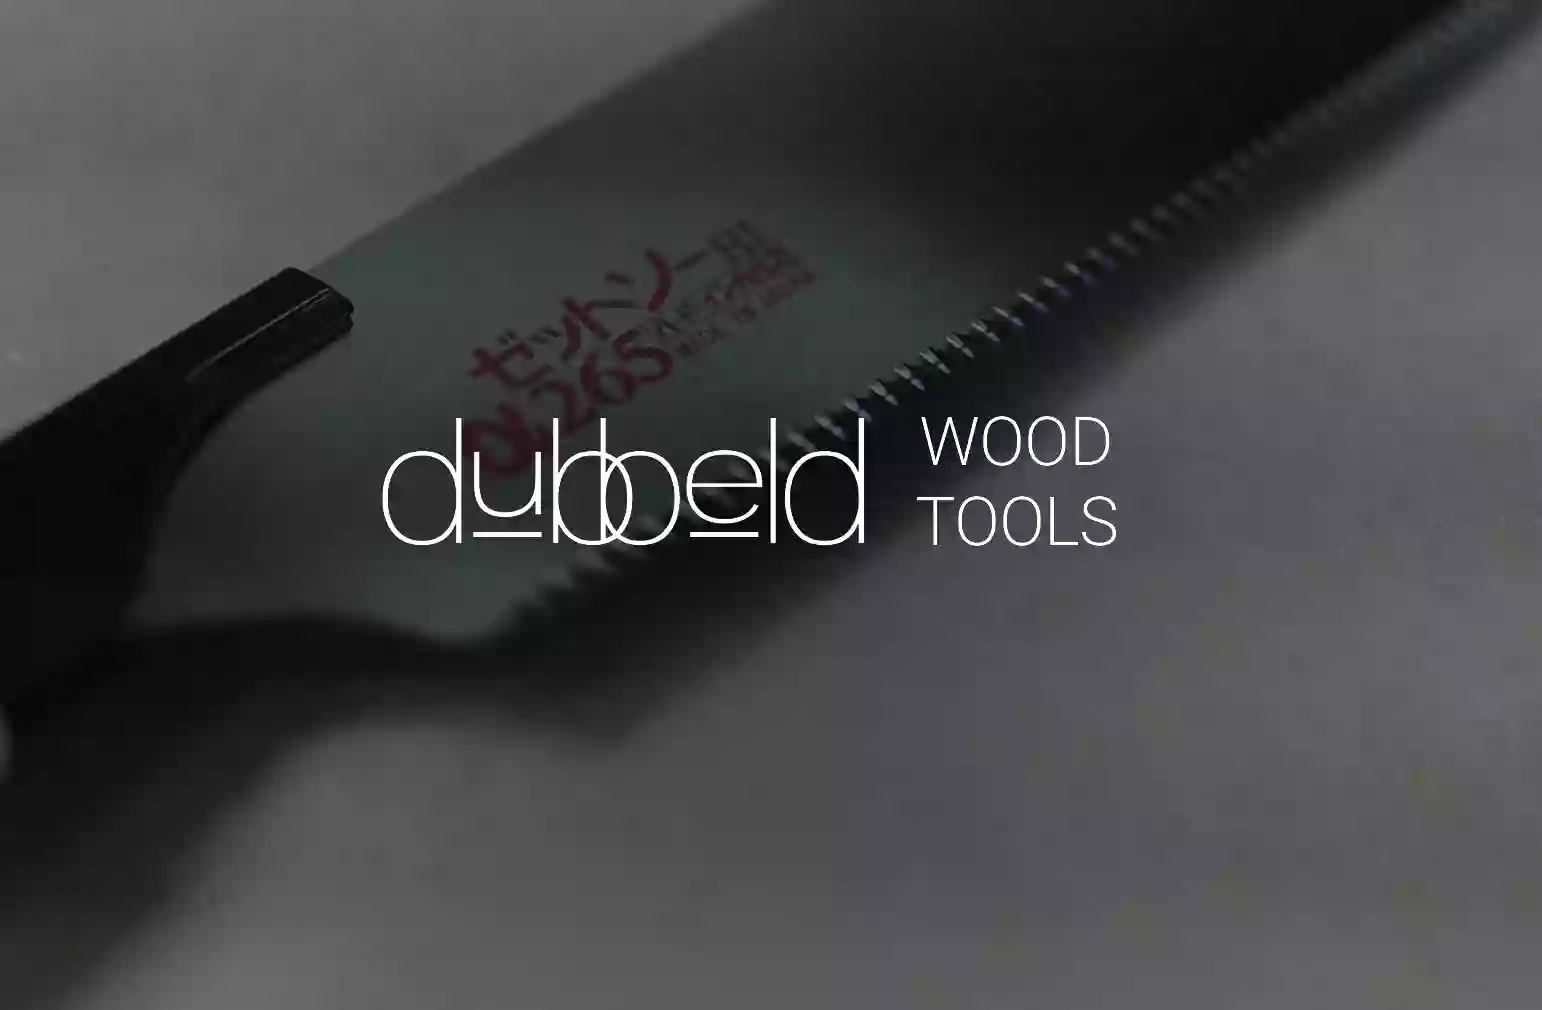 Dubbeld Wood Tools